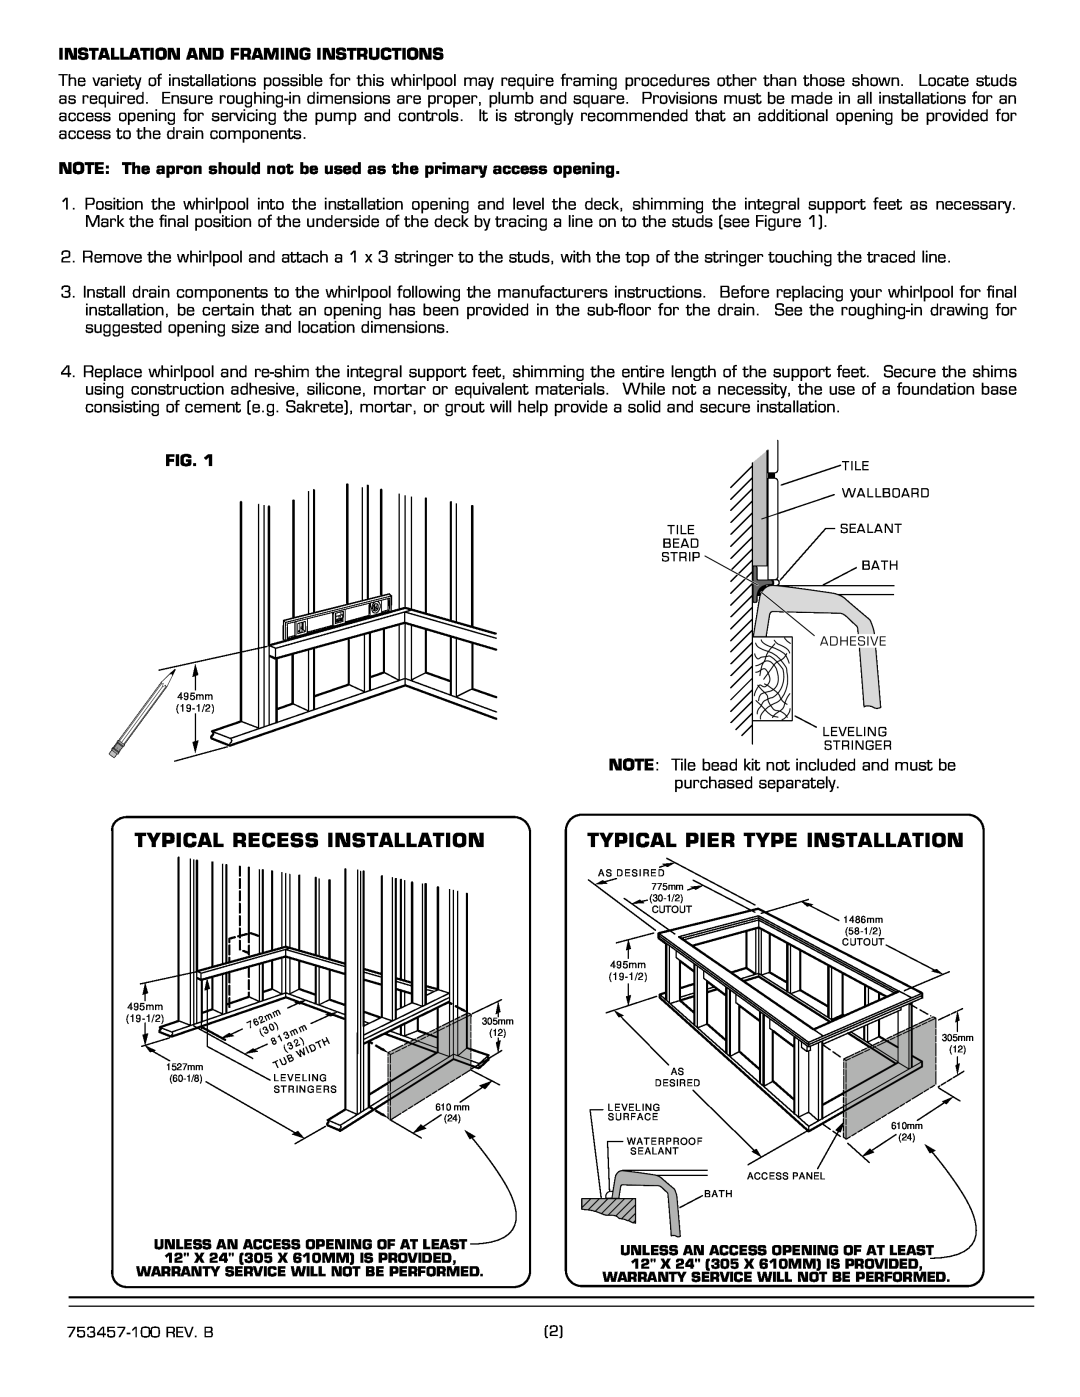 American Standard 2425.XXXW SERIES installation instructions Typical Recess Installation, Typical Pier Type Installation 